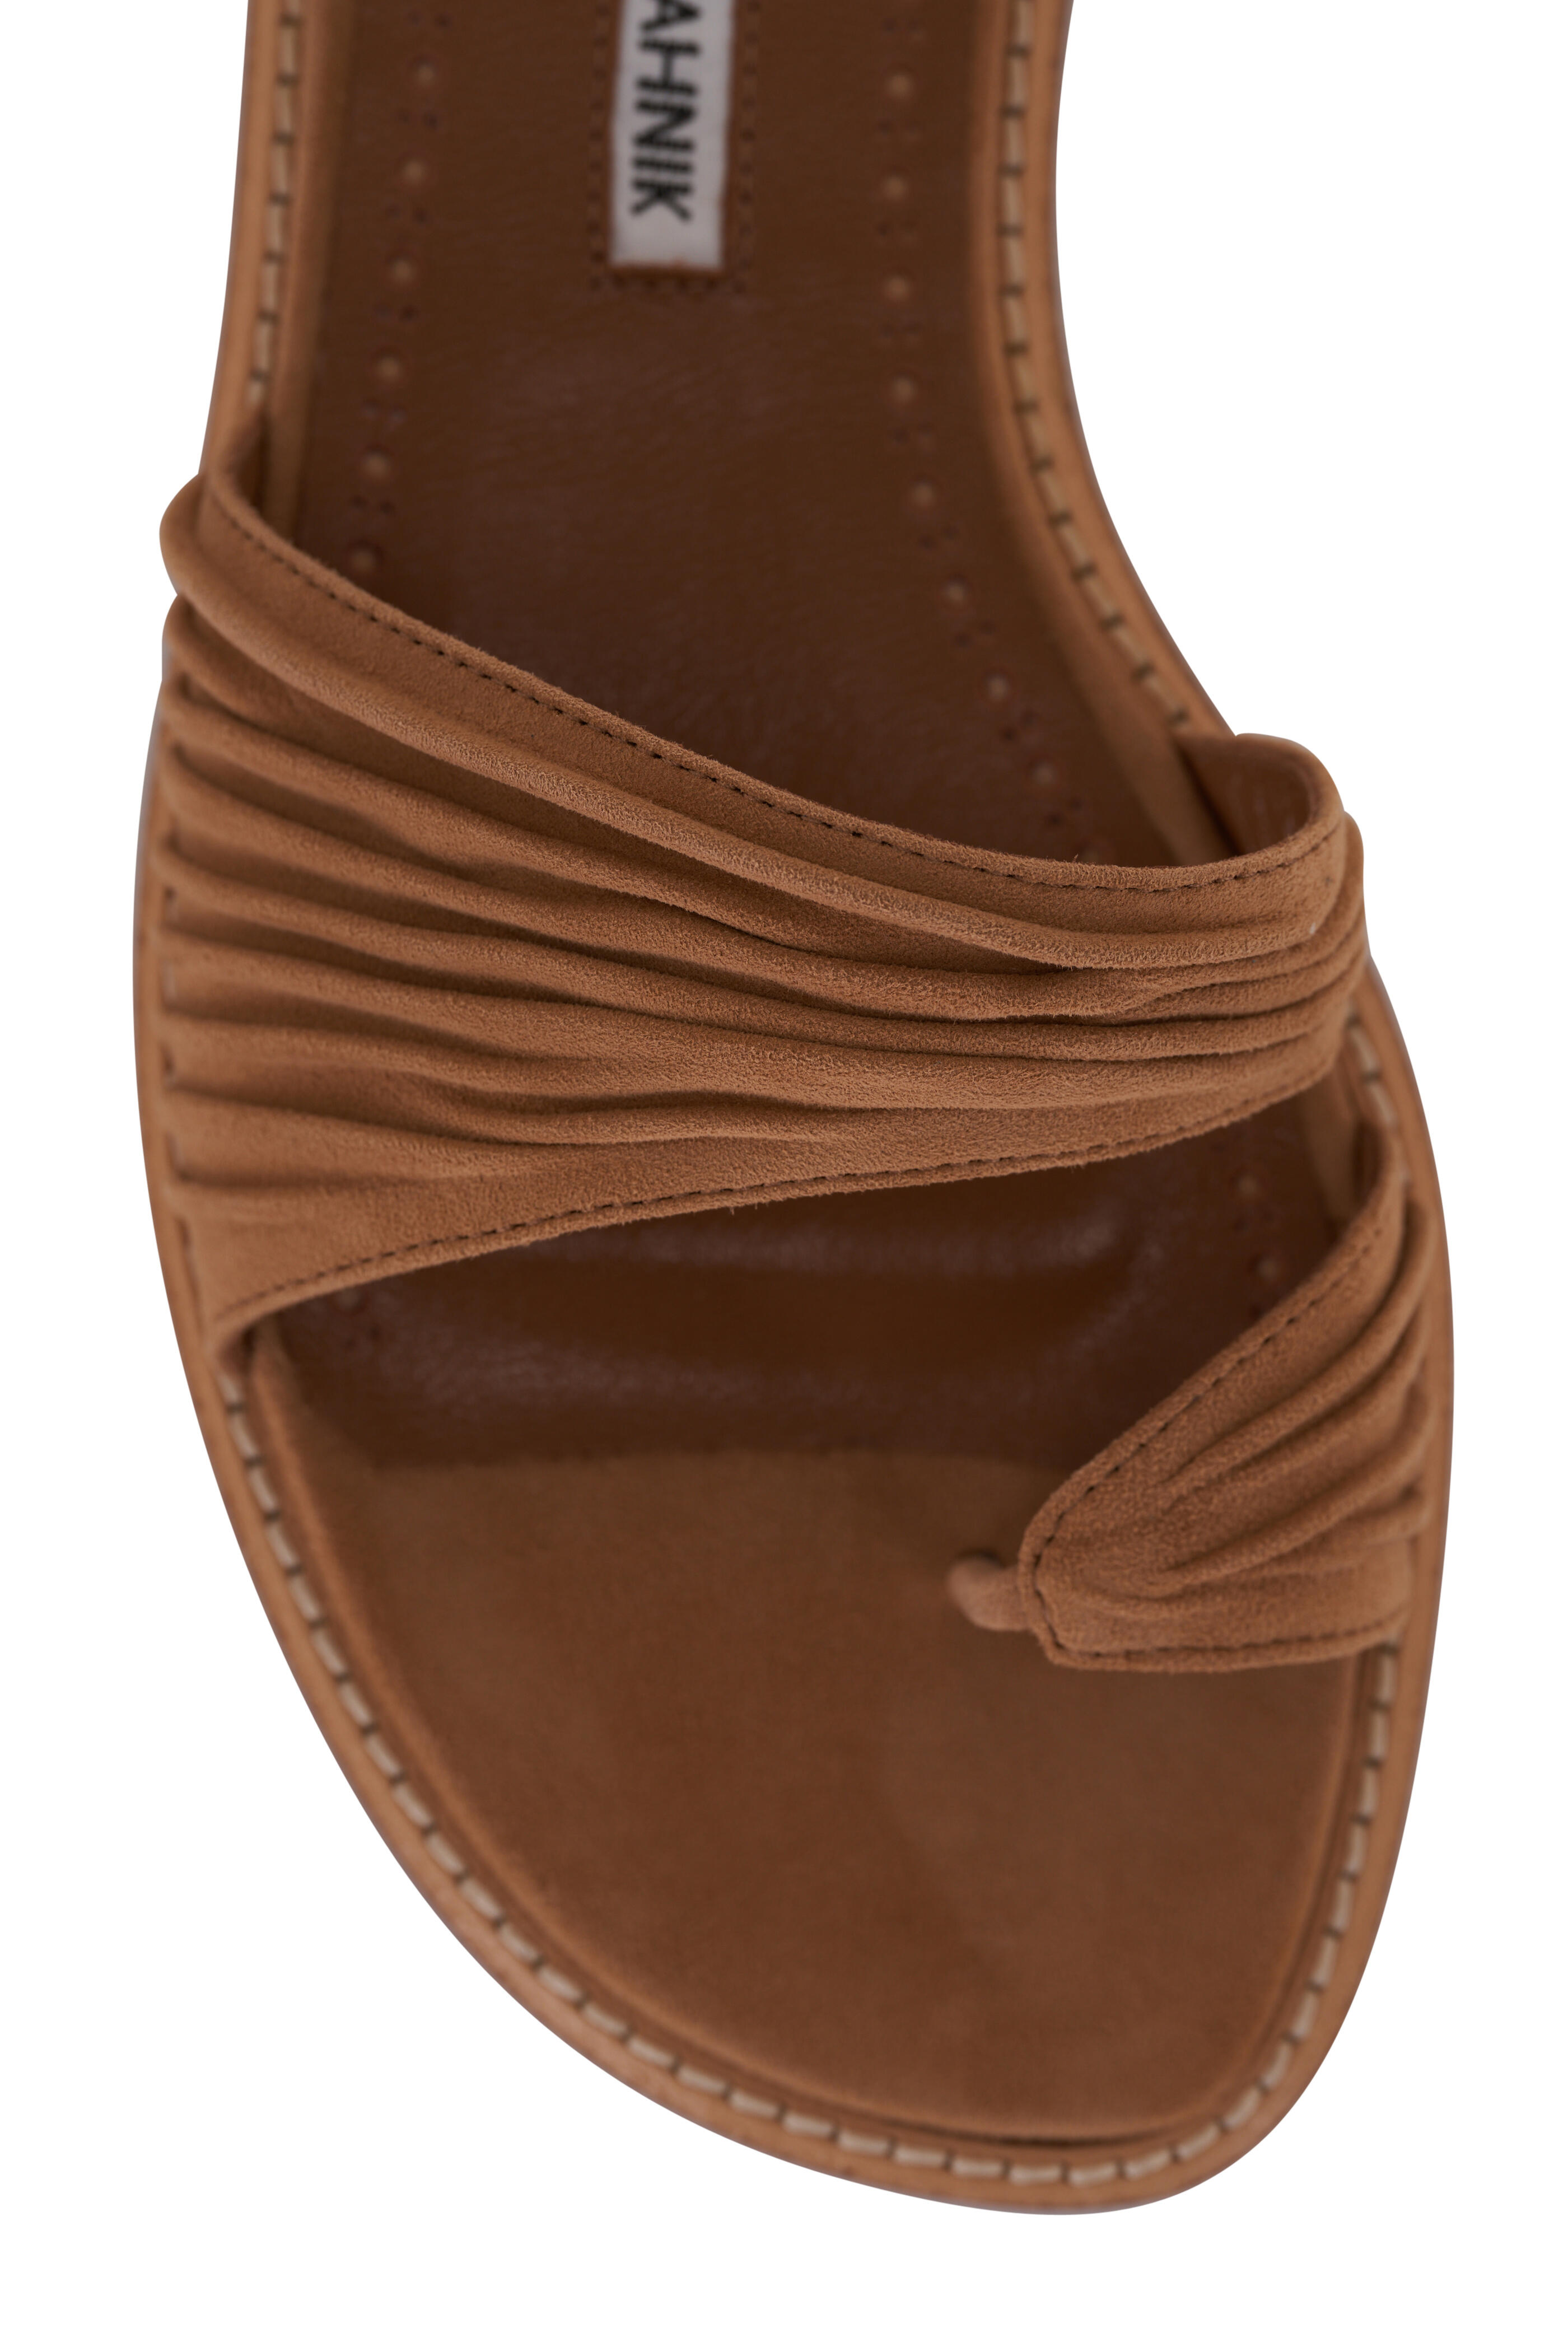 Buy Manolo Blahnik Otawi Leather Sandals Uk 7 - Brown At 40% Off